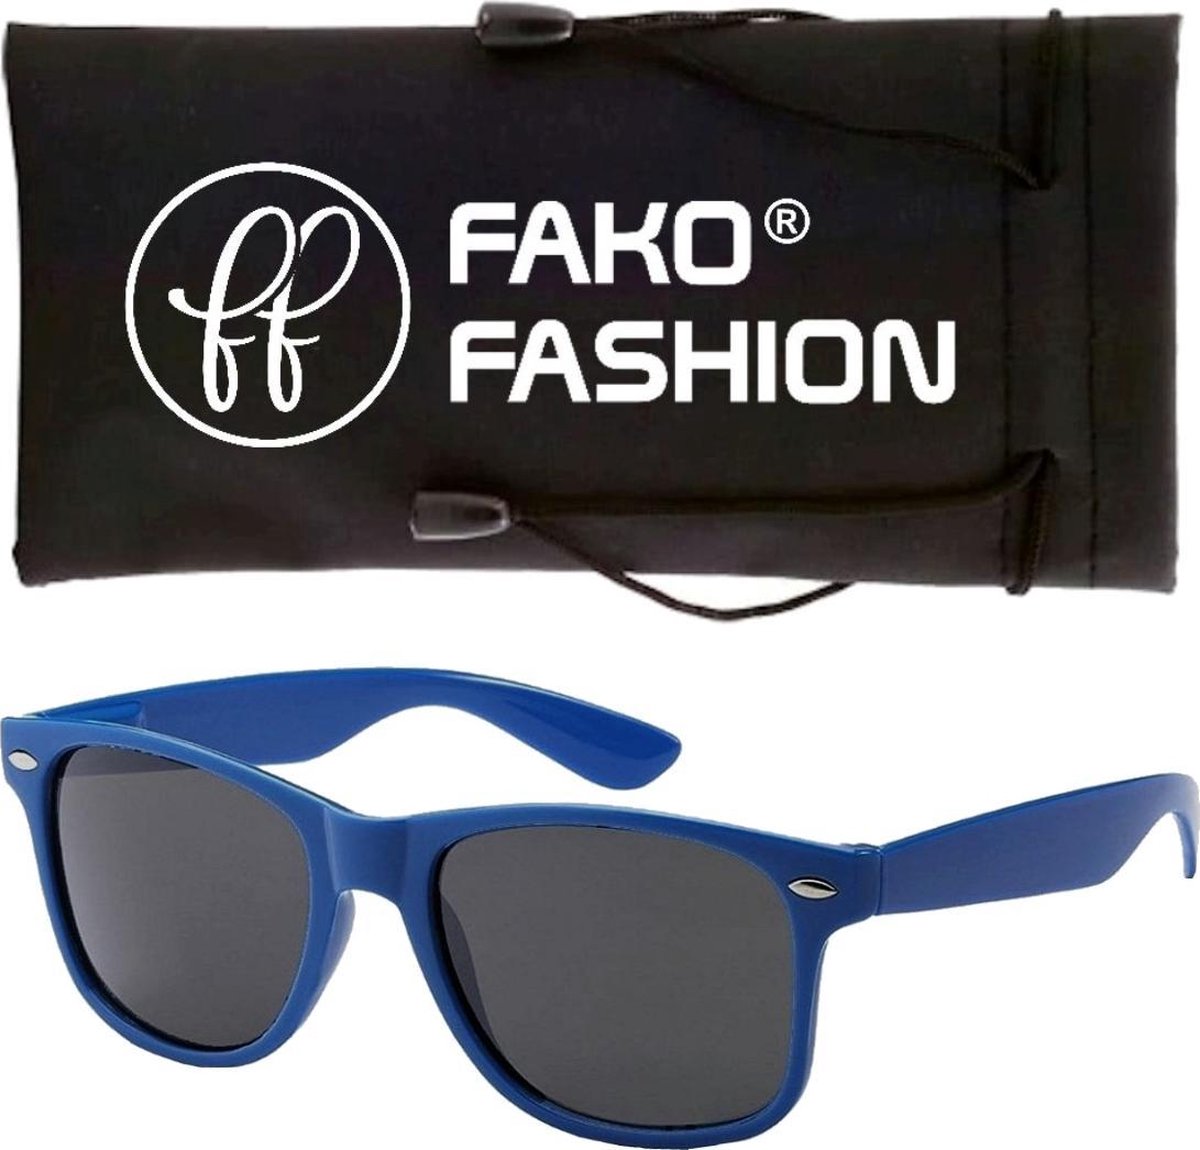 Fako Fashion® - Zonnebril - Classic - Blauw